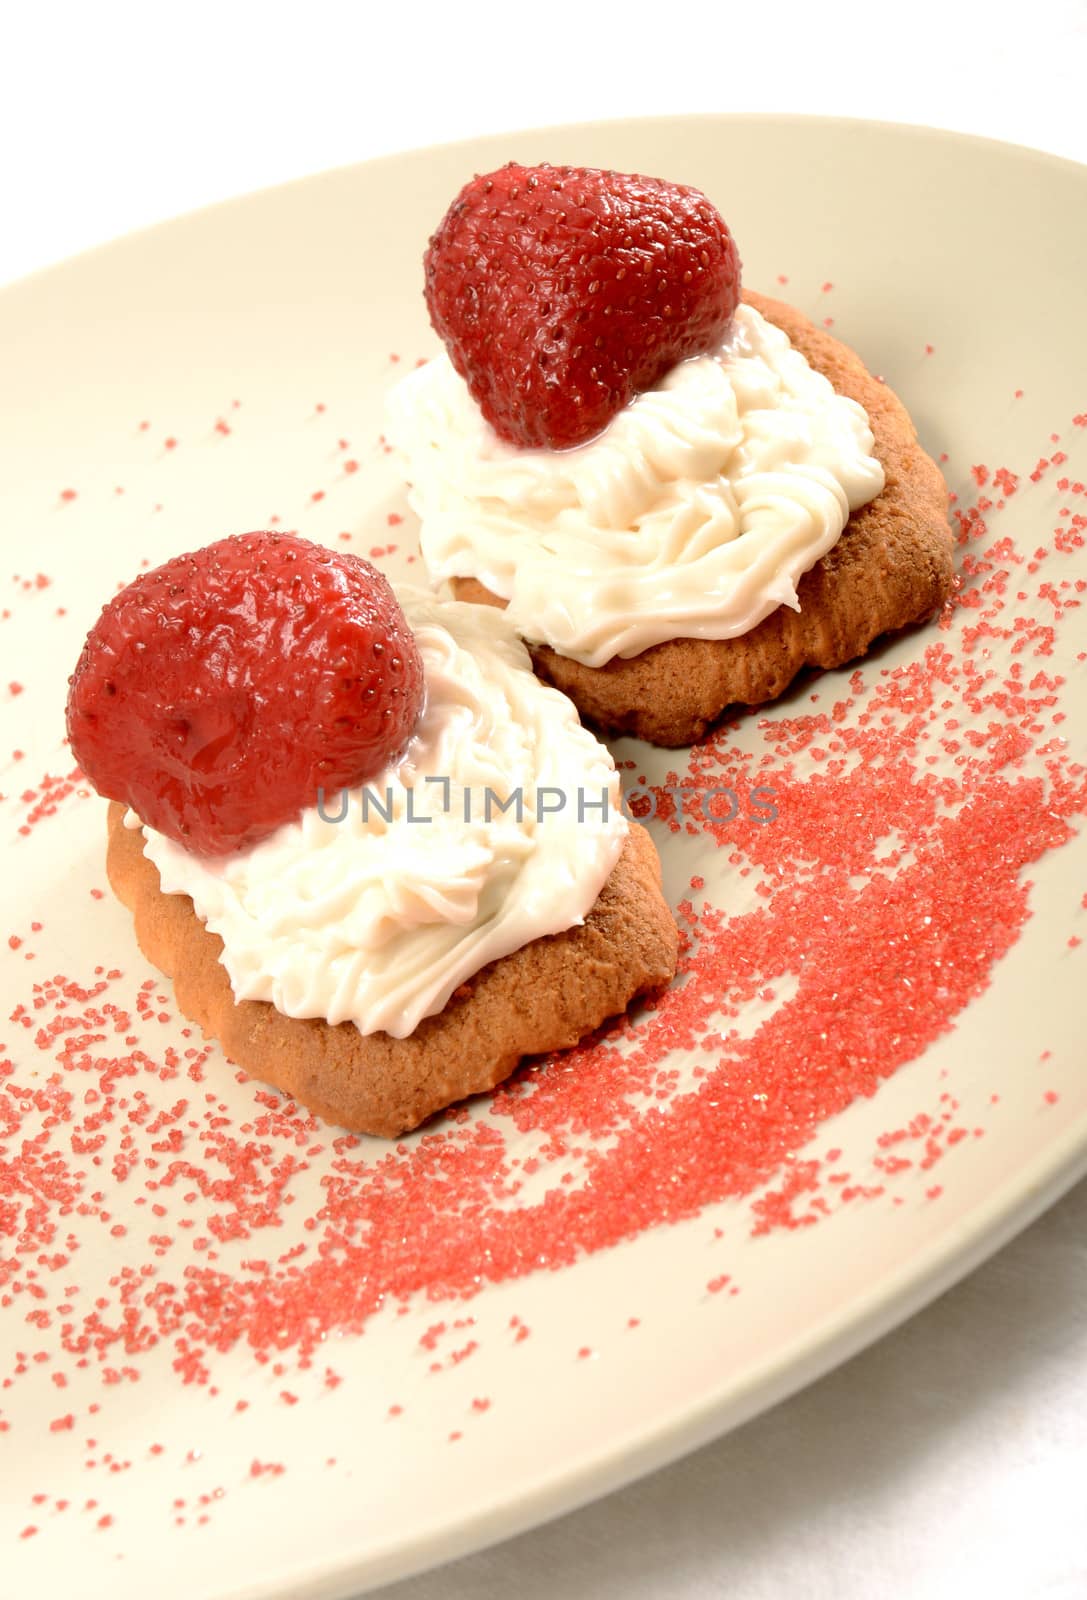 strawberry dessert and sprinkles